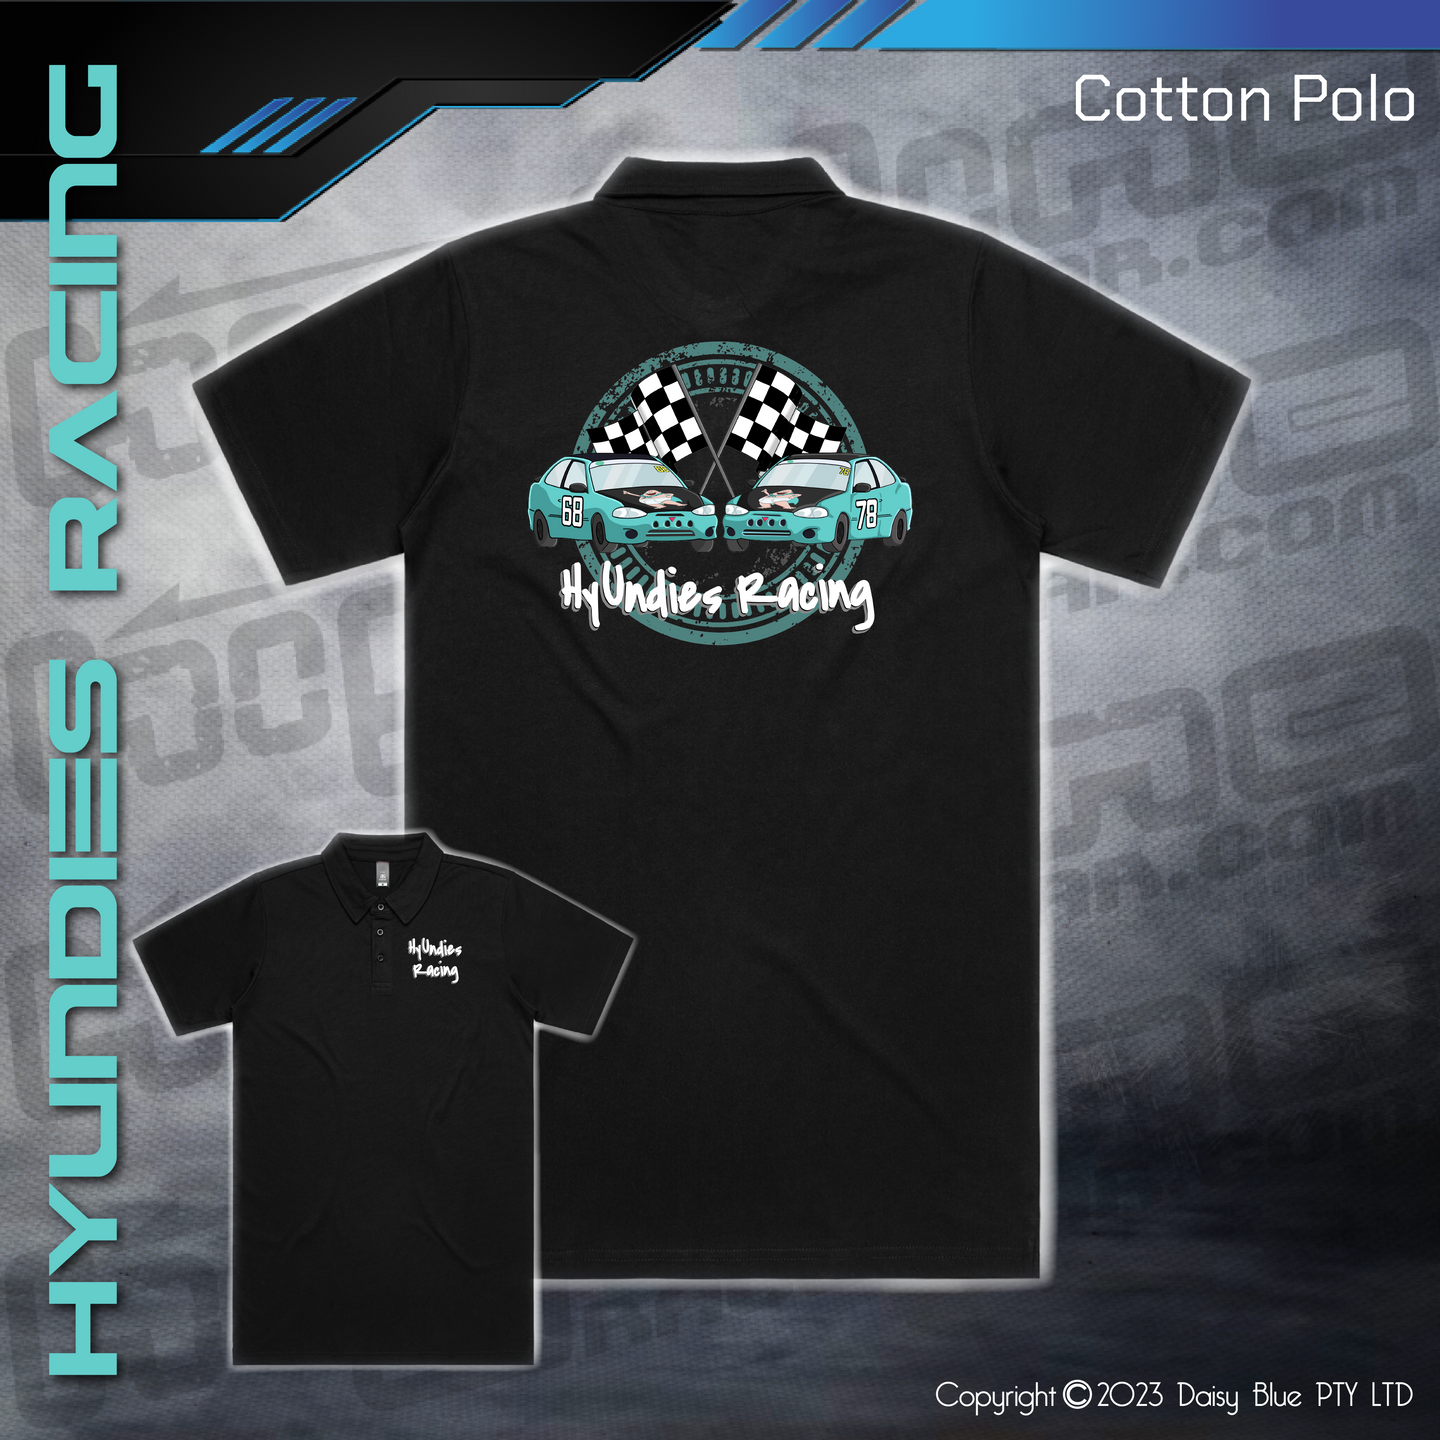 Cotton Polo - Hyundies Racing